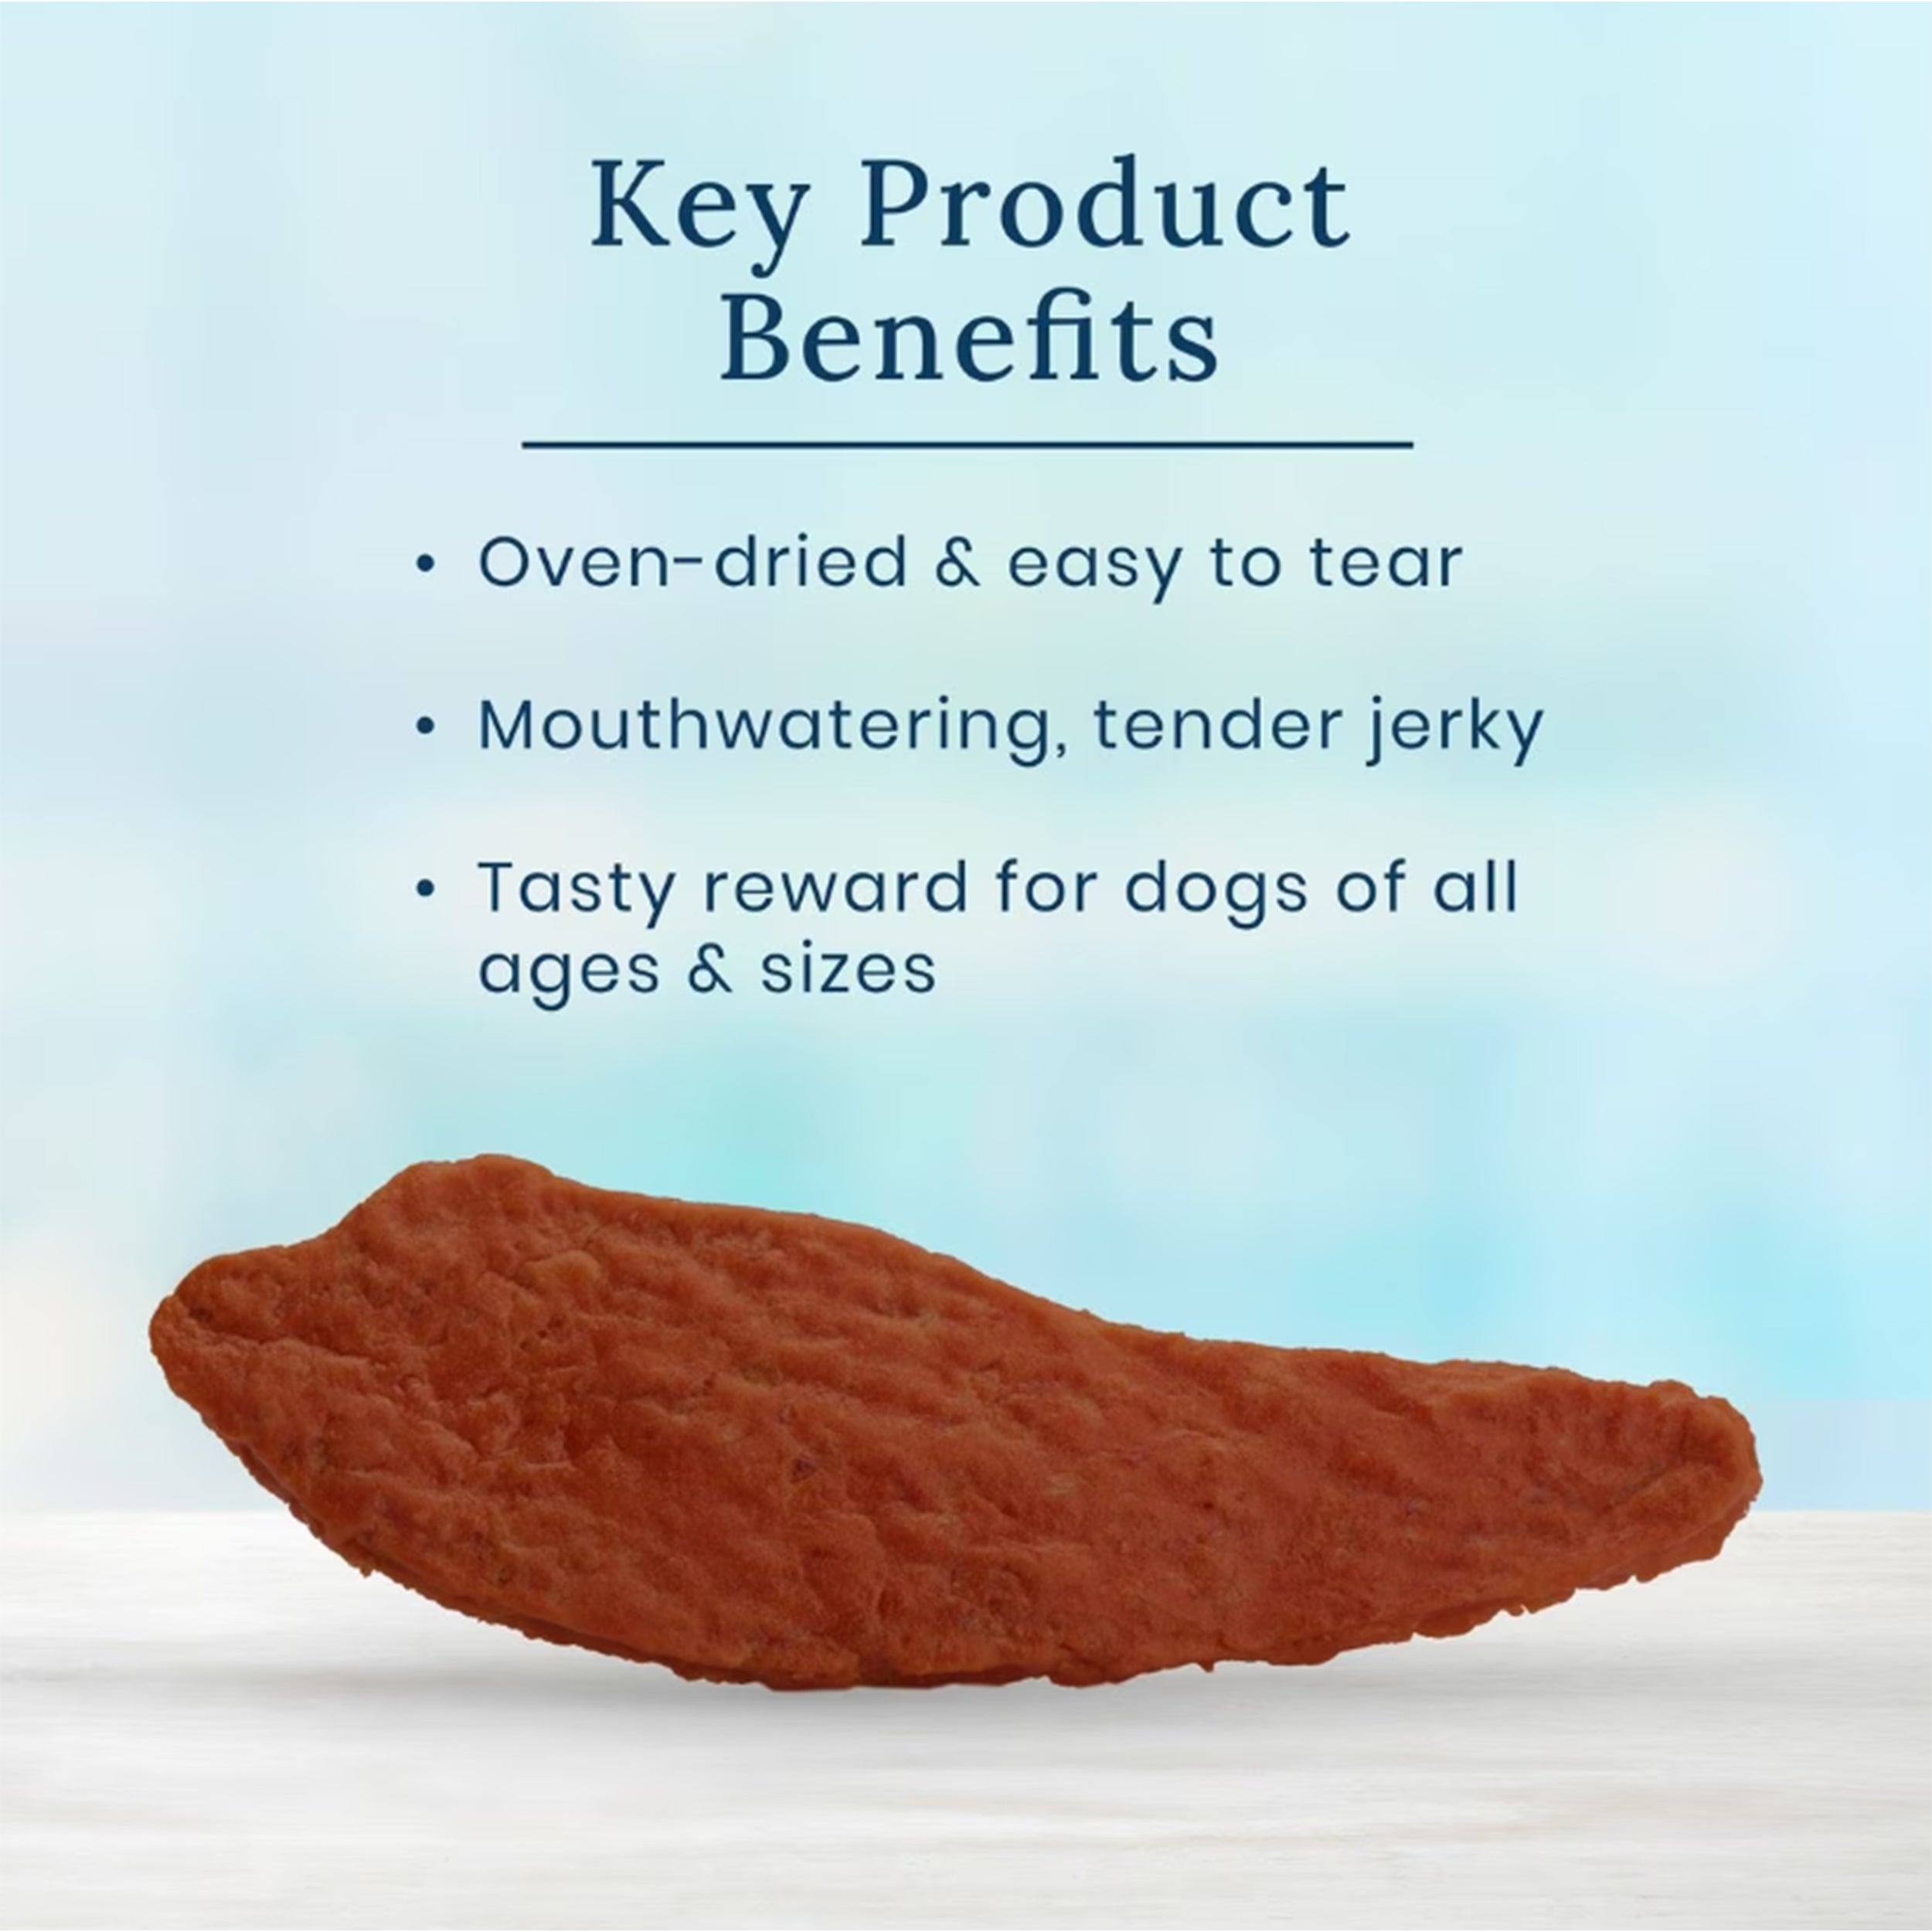 Blue Buffalo True Chews Premium Jerky Cuts Natural Steak Dog Treats, 10 OZ Bag